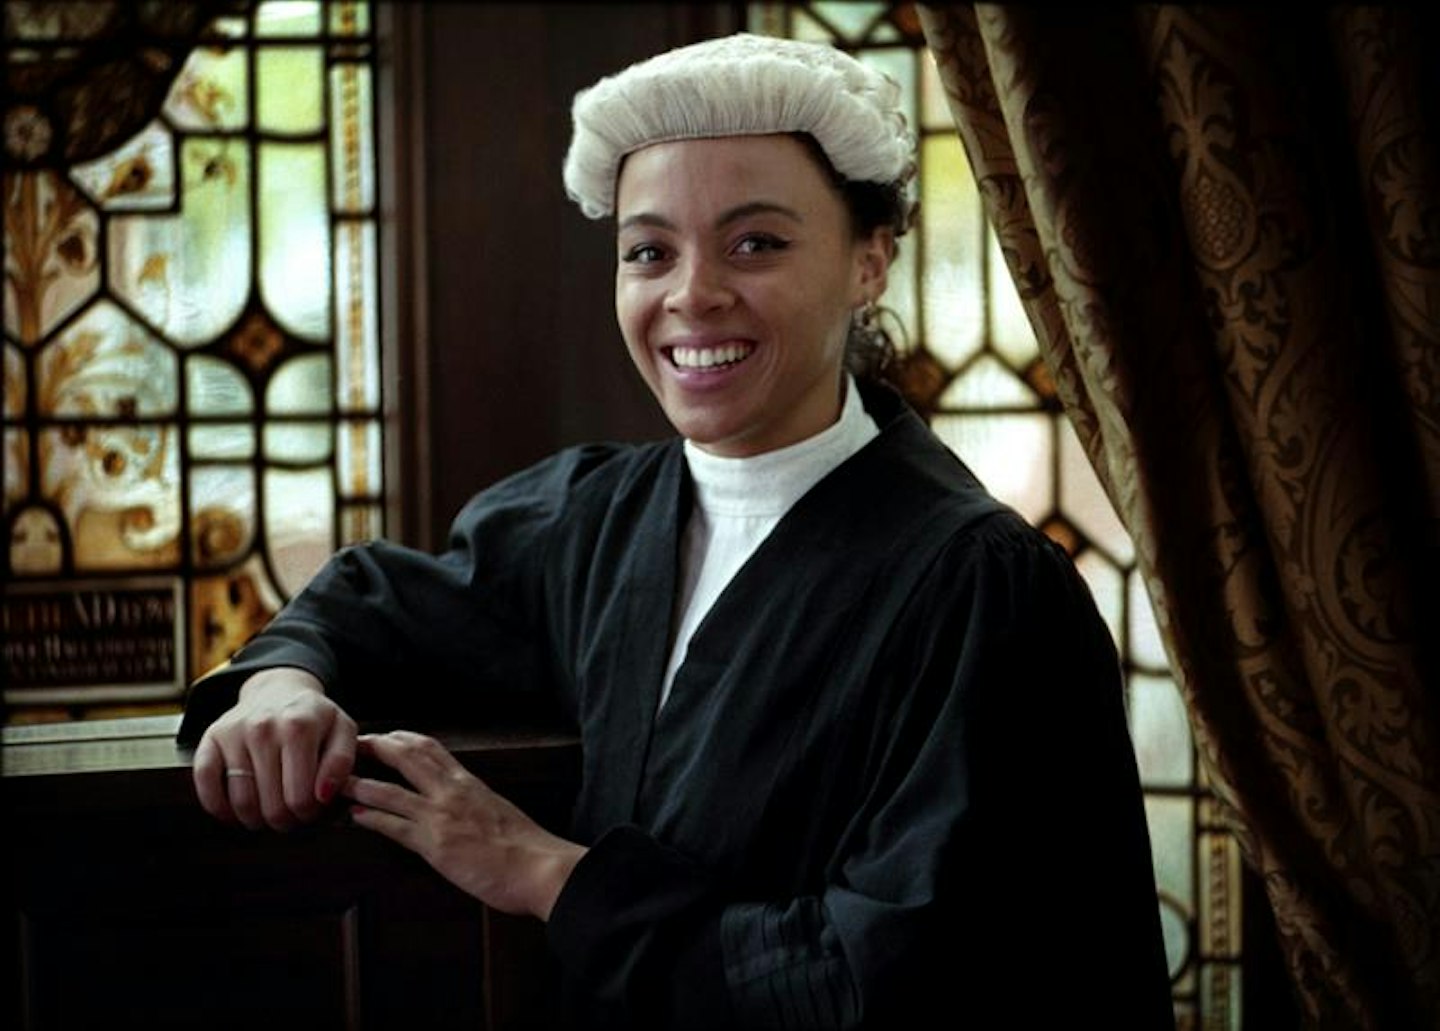 alexandra-wilson-I'm-barrister-but-people-assume-I'm-the-defendant